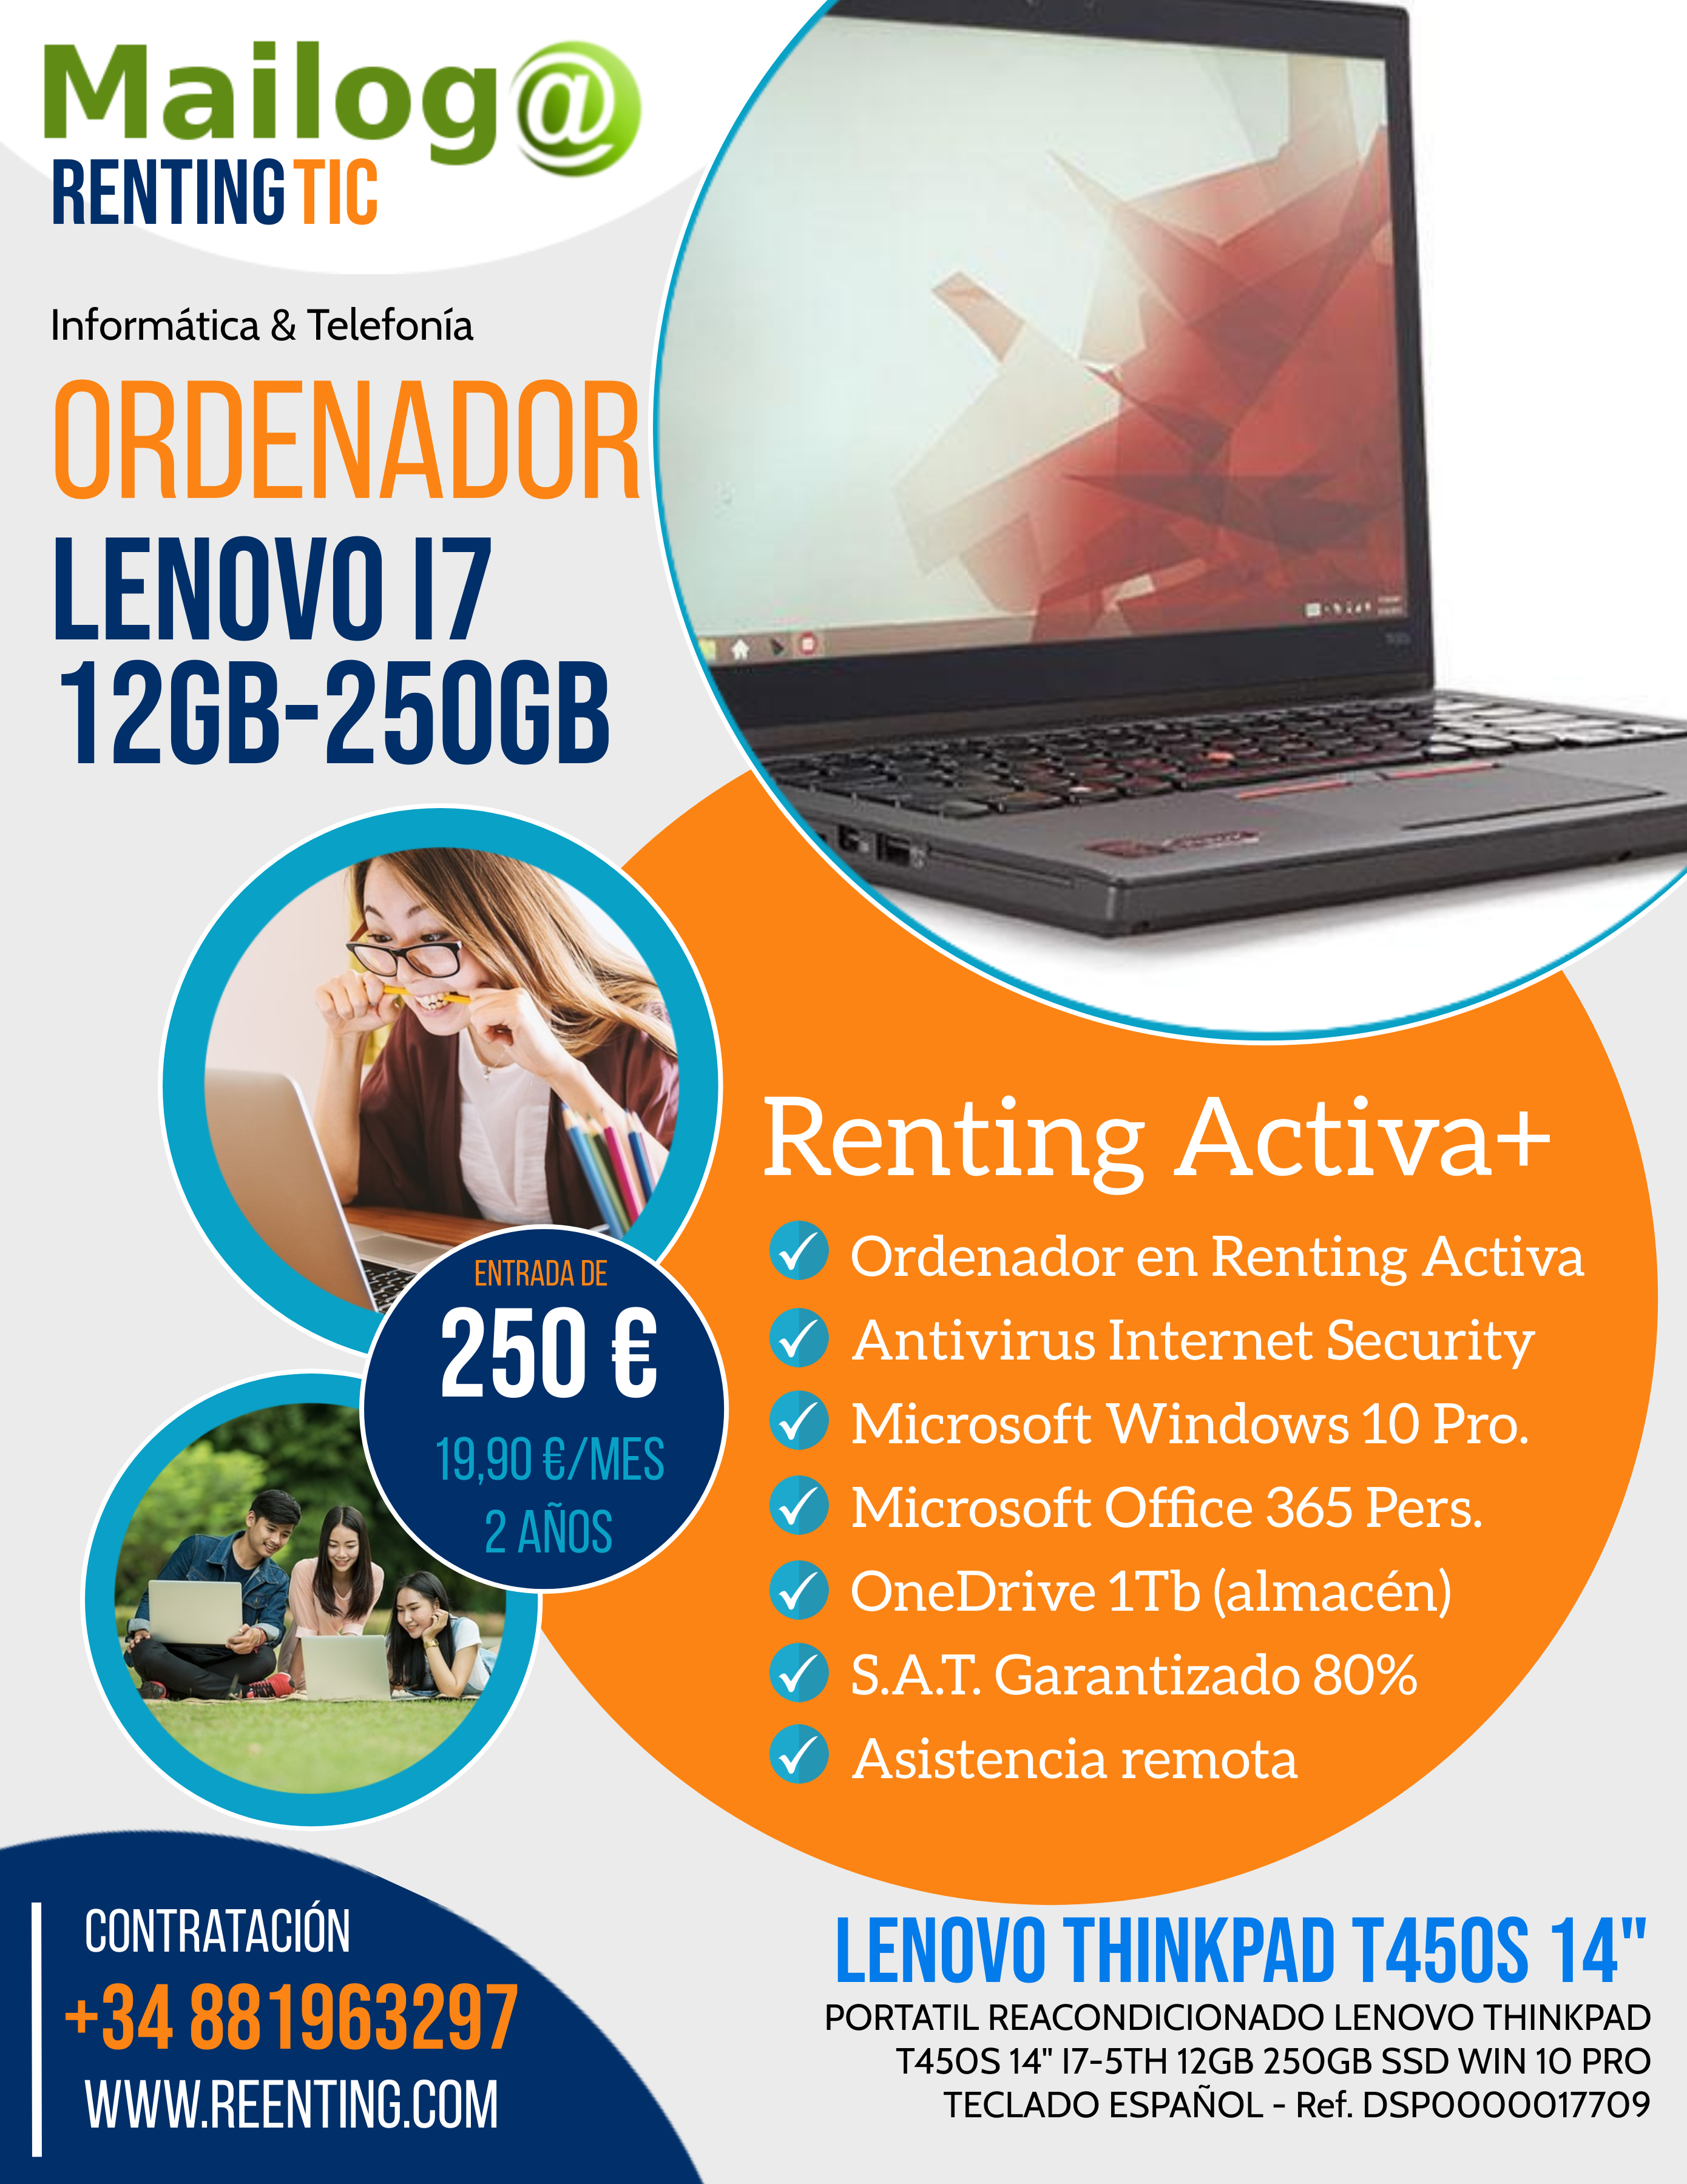 Mailoga Renting Lenovo I7 12Gb 250Gb (rea)